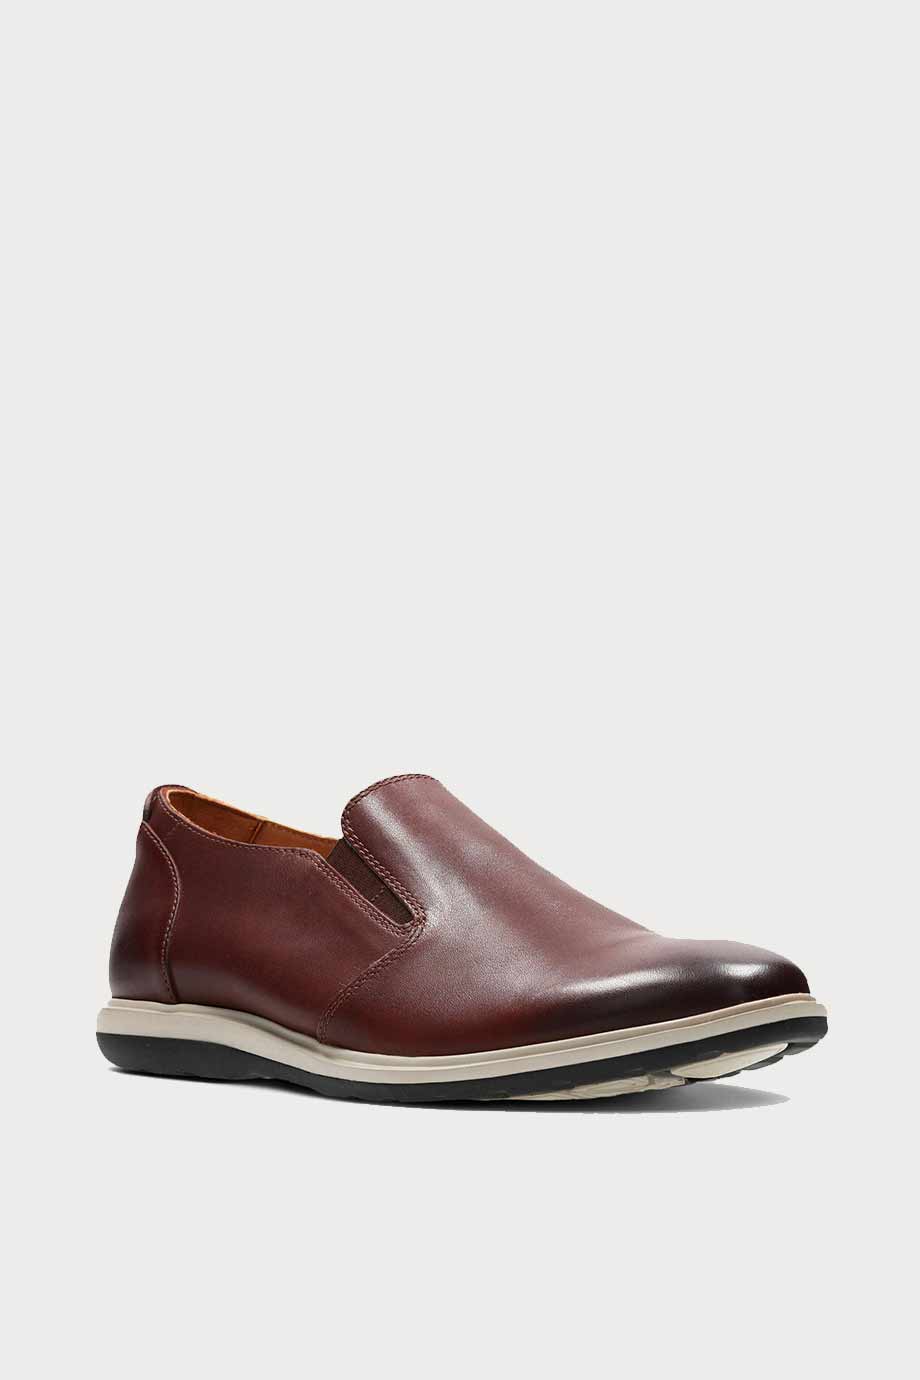 spiridoula metheniti shoes xalkida p Glaston Step clarks british tan leather 2